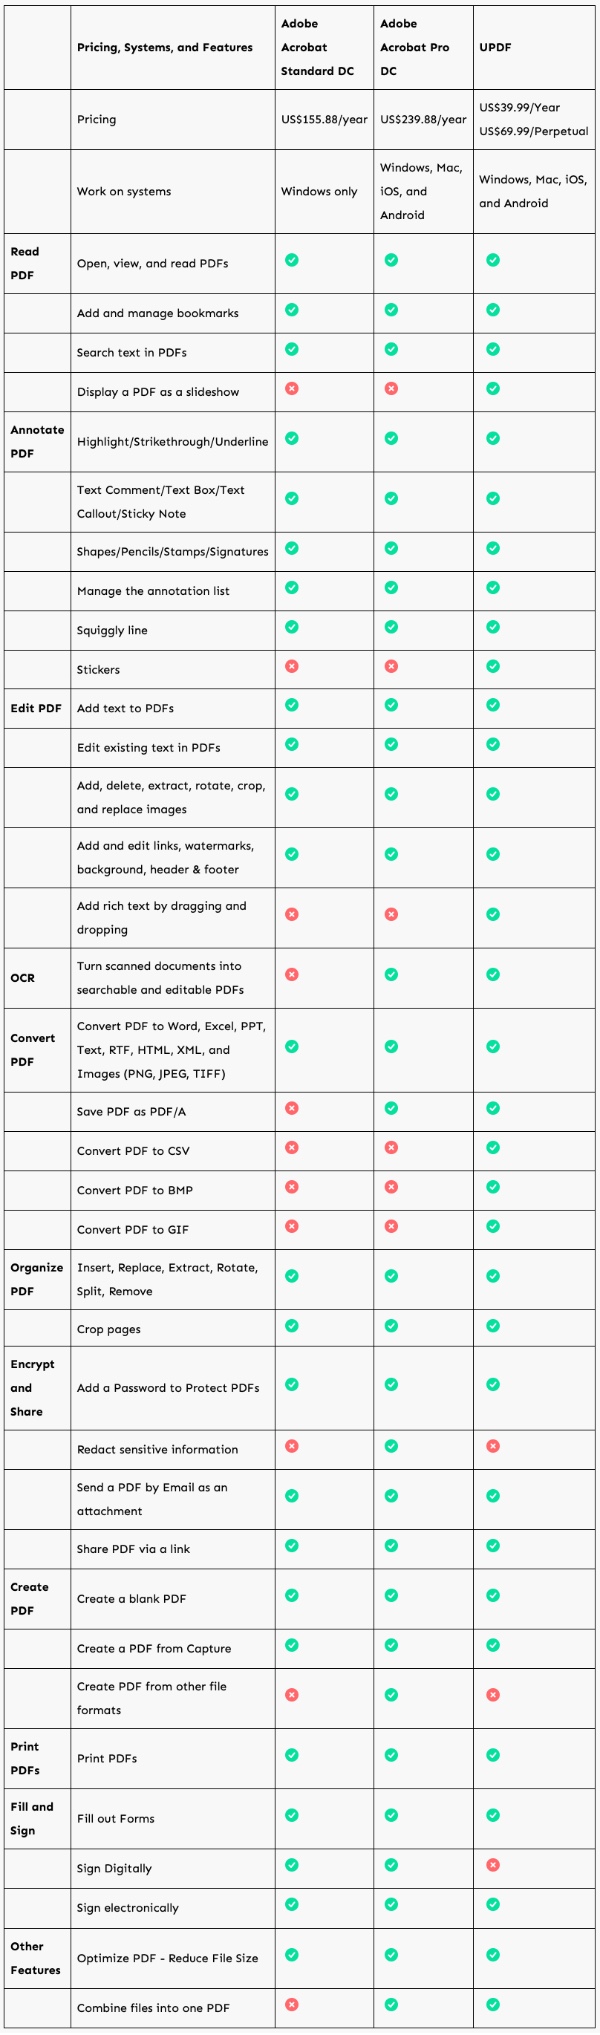 UPDF-vs-Adobe-Acrobat-comparison - iOS Hacker